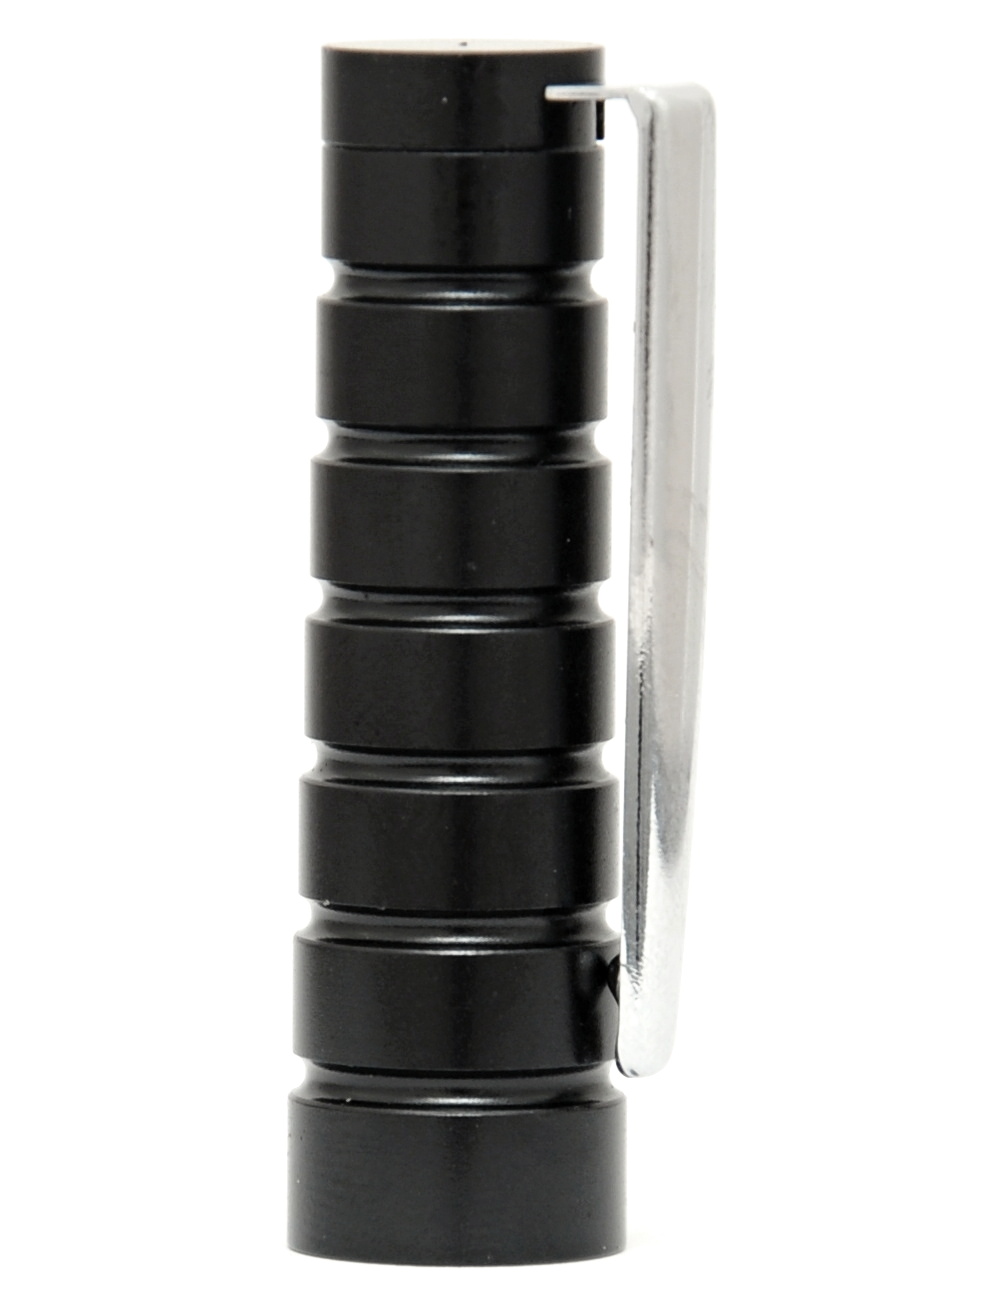 EC-ORIGINAL PEN víčko (krytka) pro eGo baterie Barva: Černá, Tip: eGo, Materiál: Hliník, Tvar: Kulatý